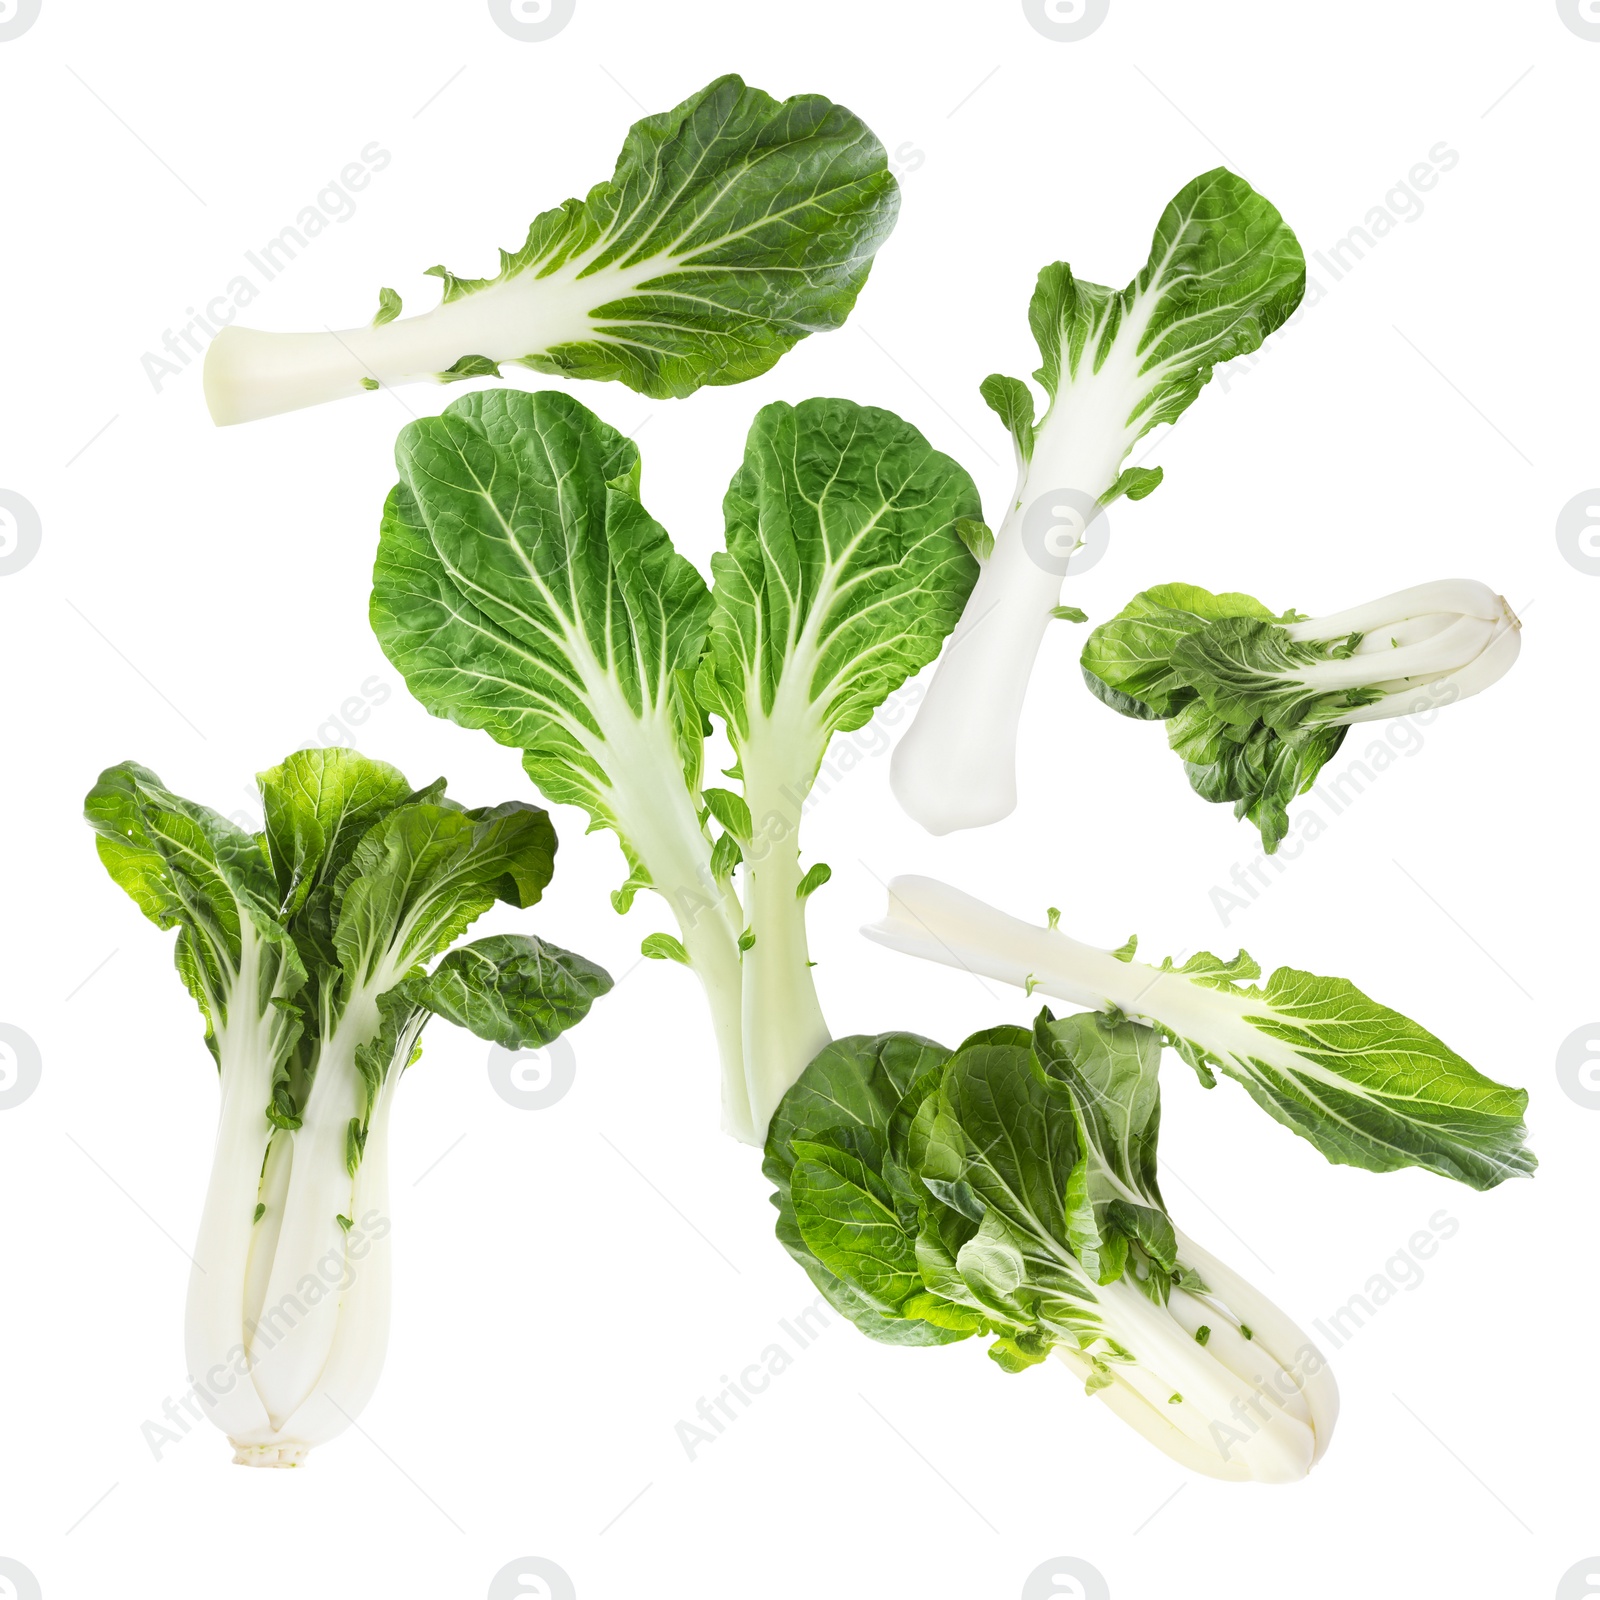 Image of Fresh green pak choy cabbages falling on white background